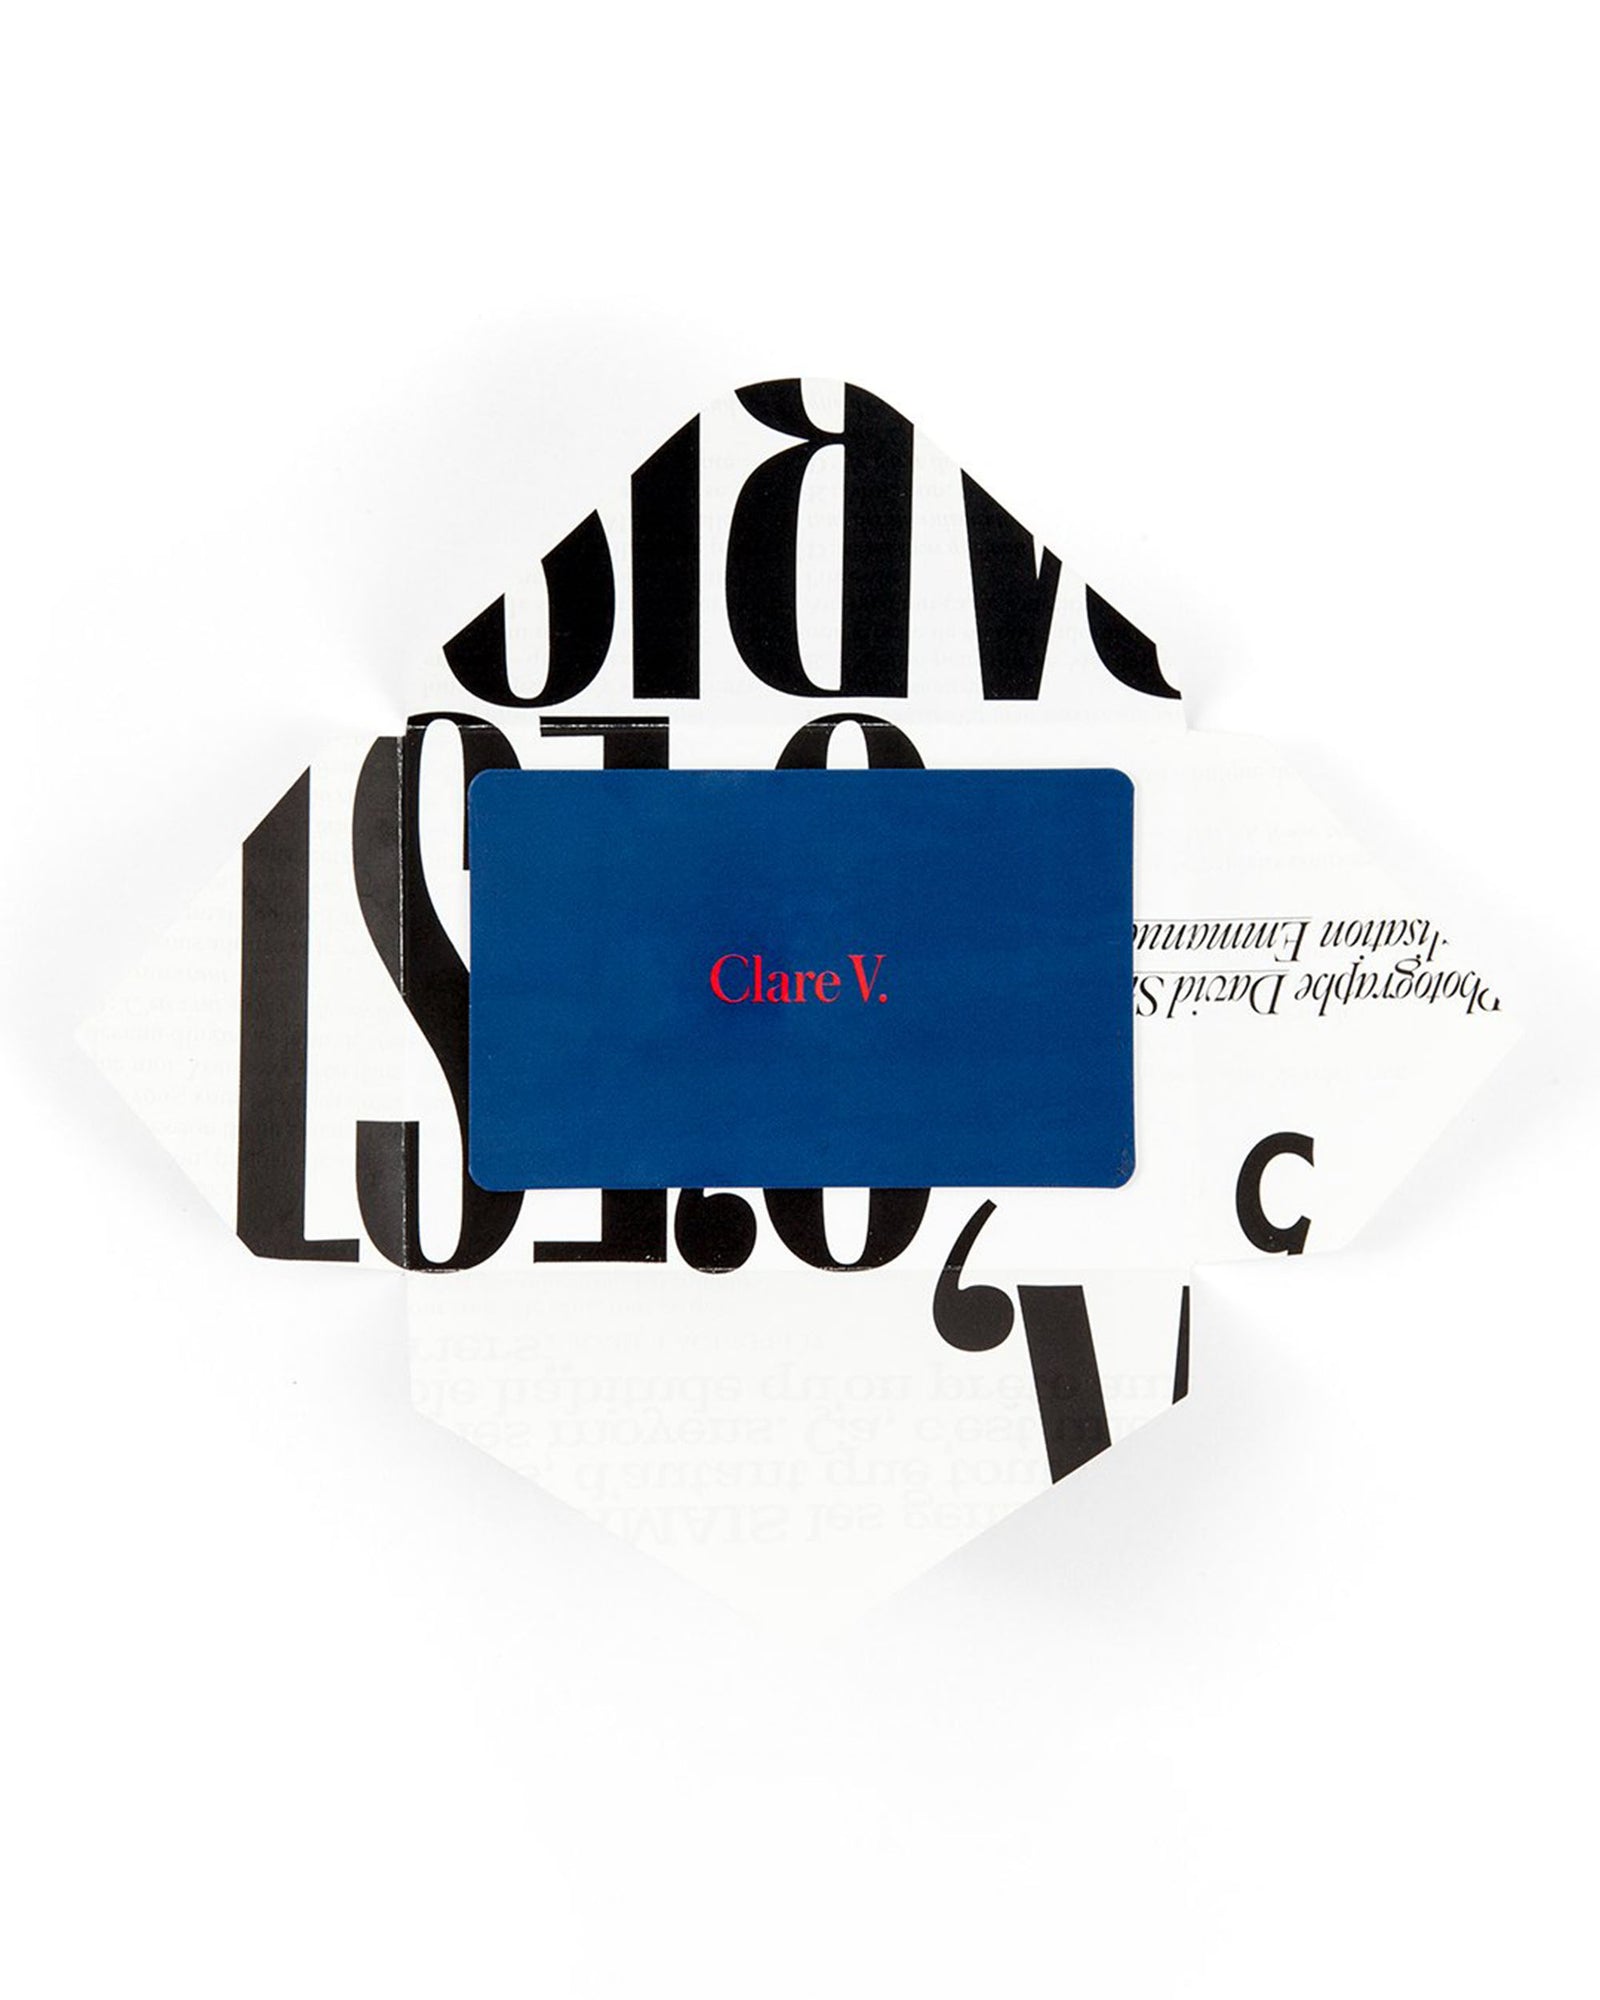 Clare V. Gift Card